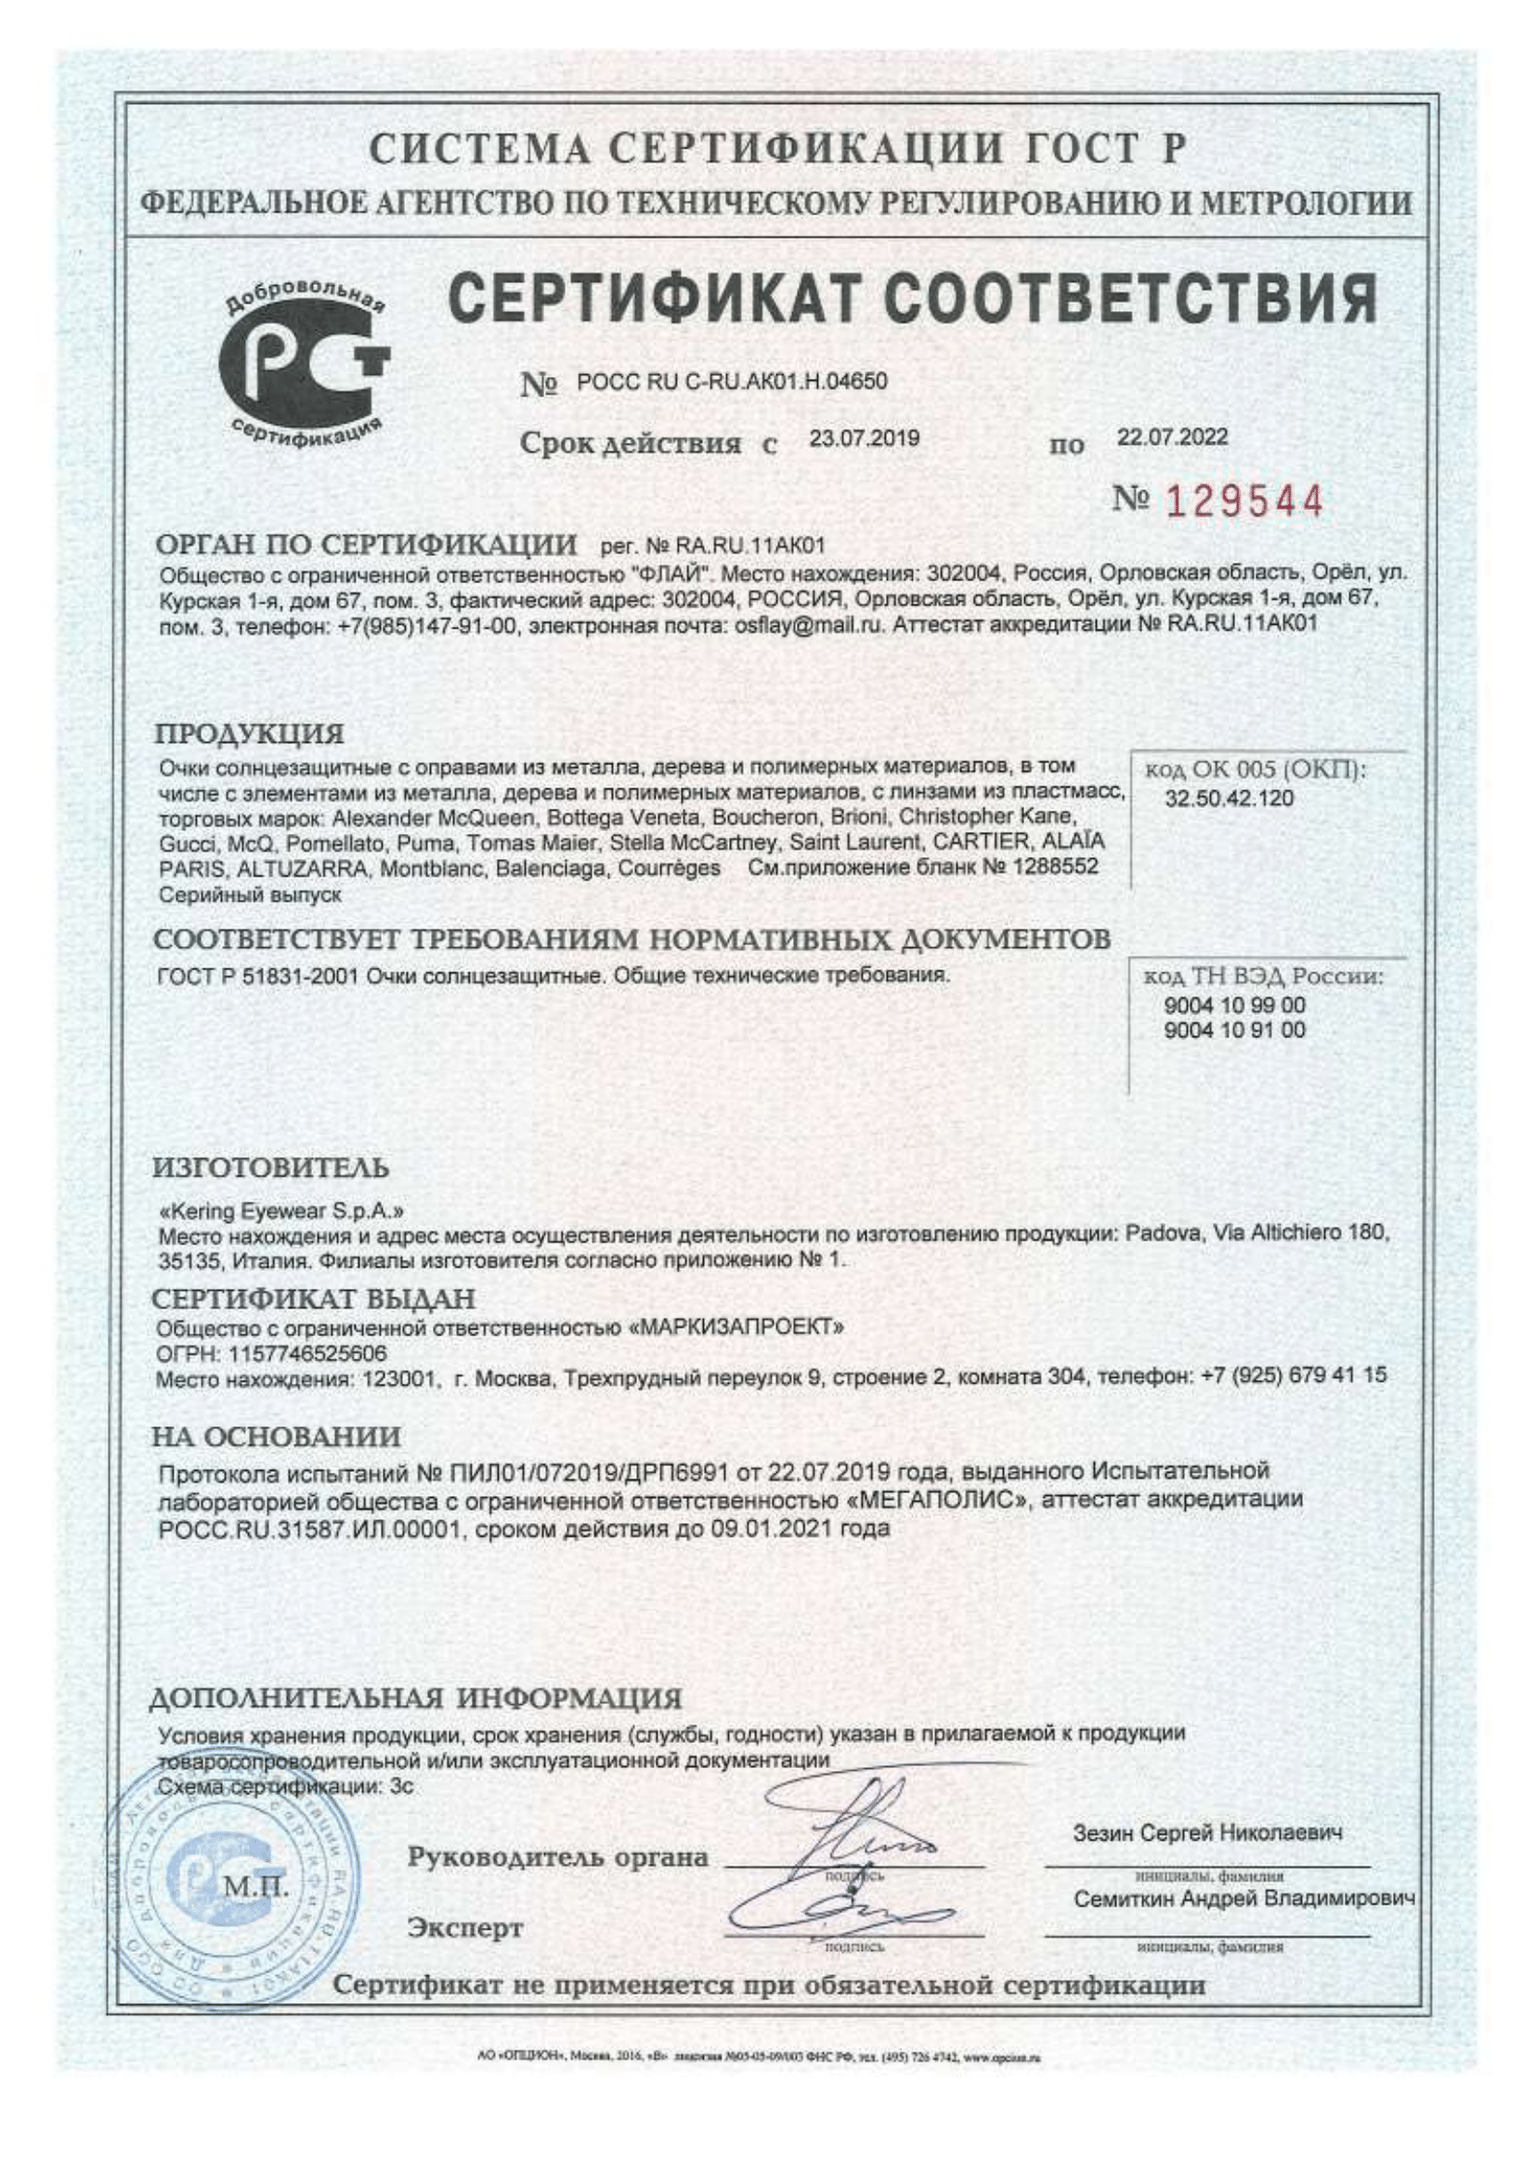 /images/certificates/sertificate4-1.png